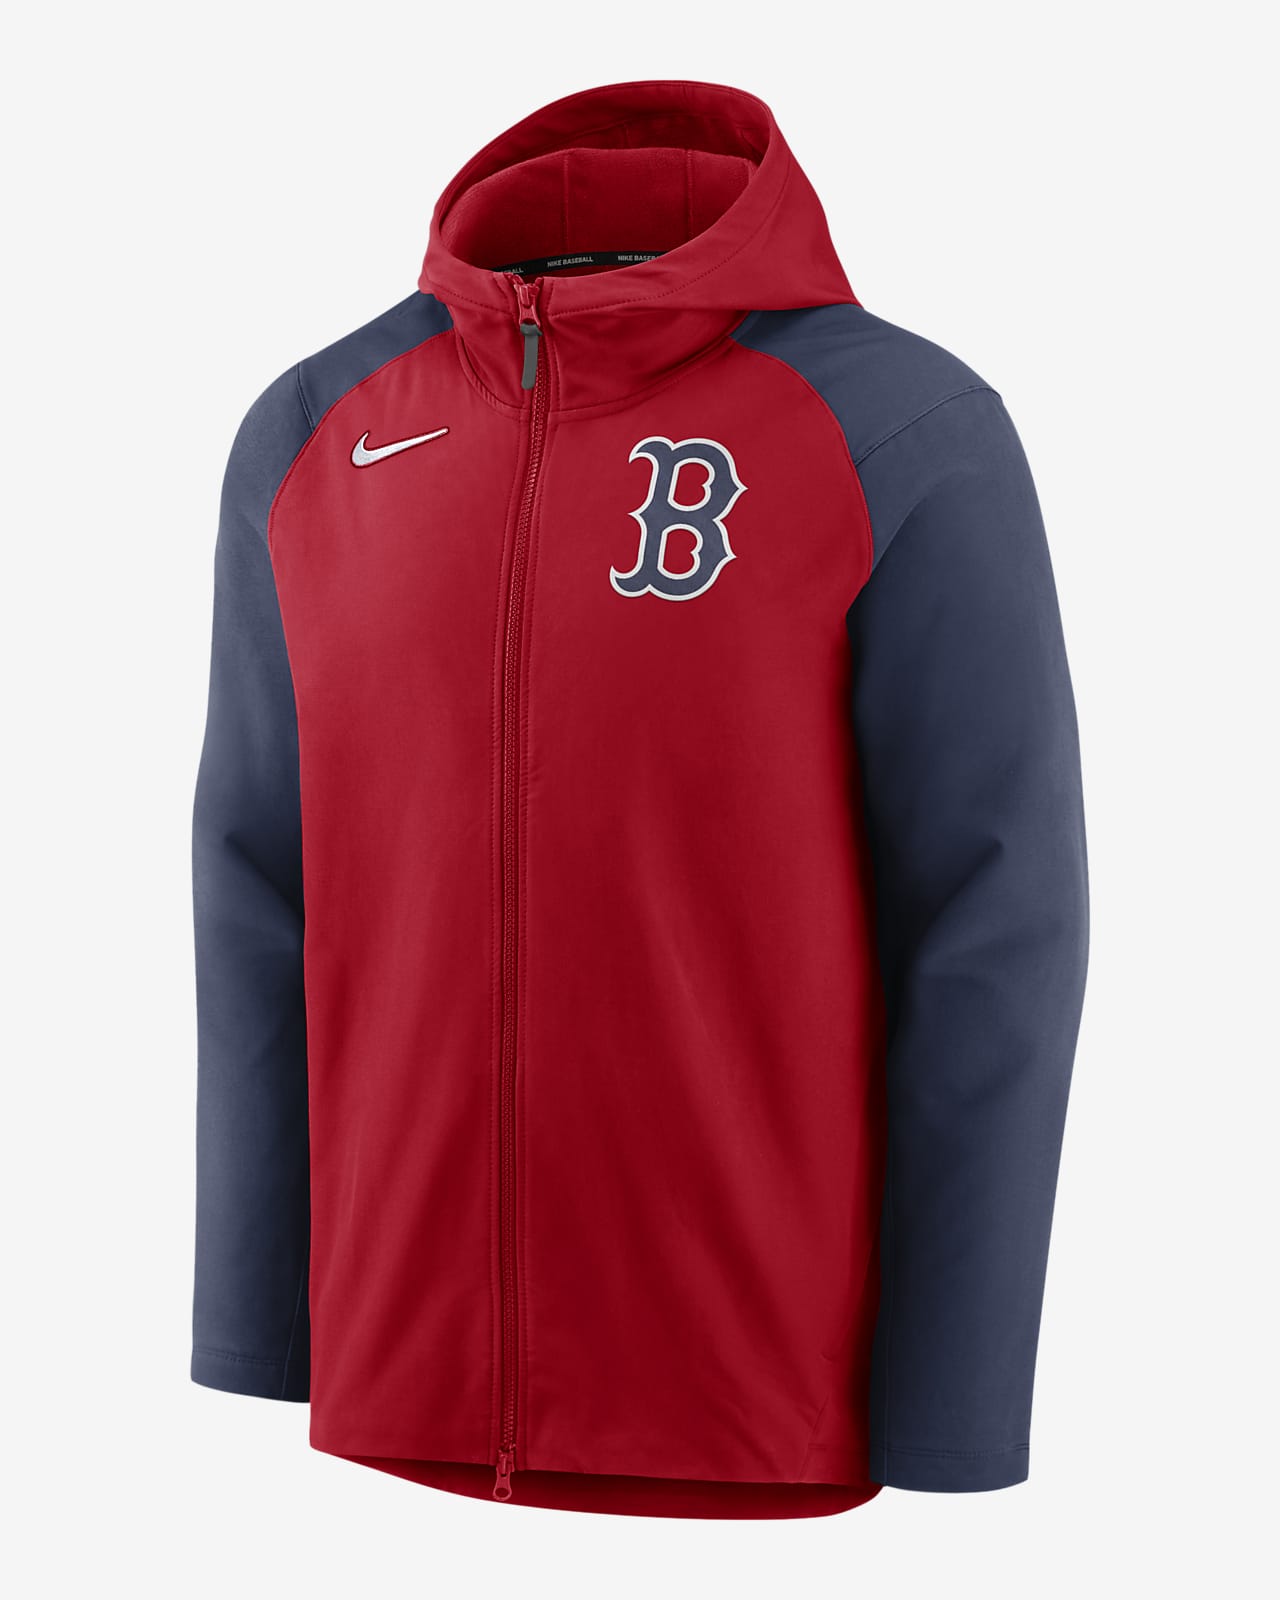 Nike Therma Player MLB Boston Red Sox Mens FullZip Jacket Nikecom